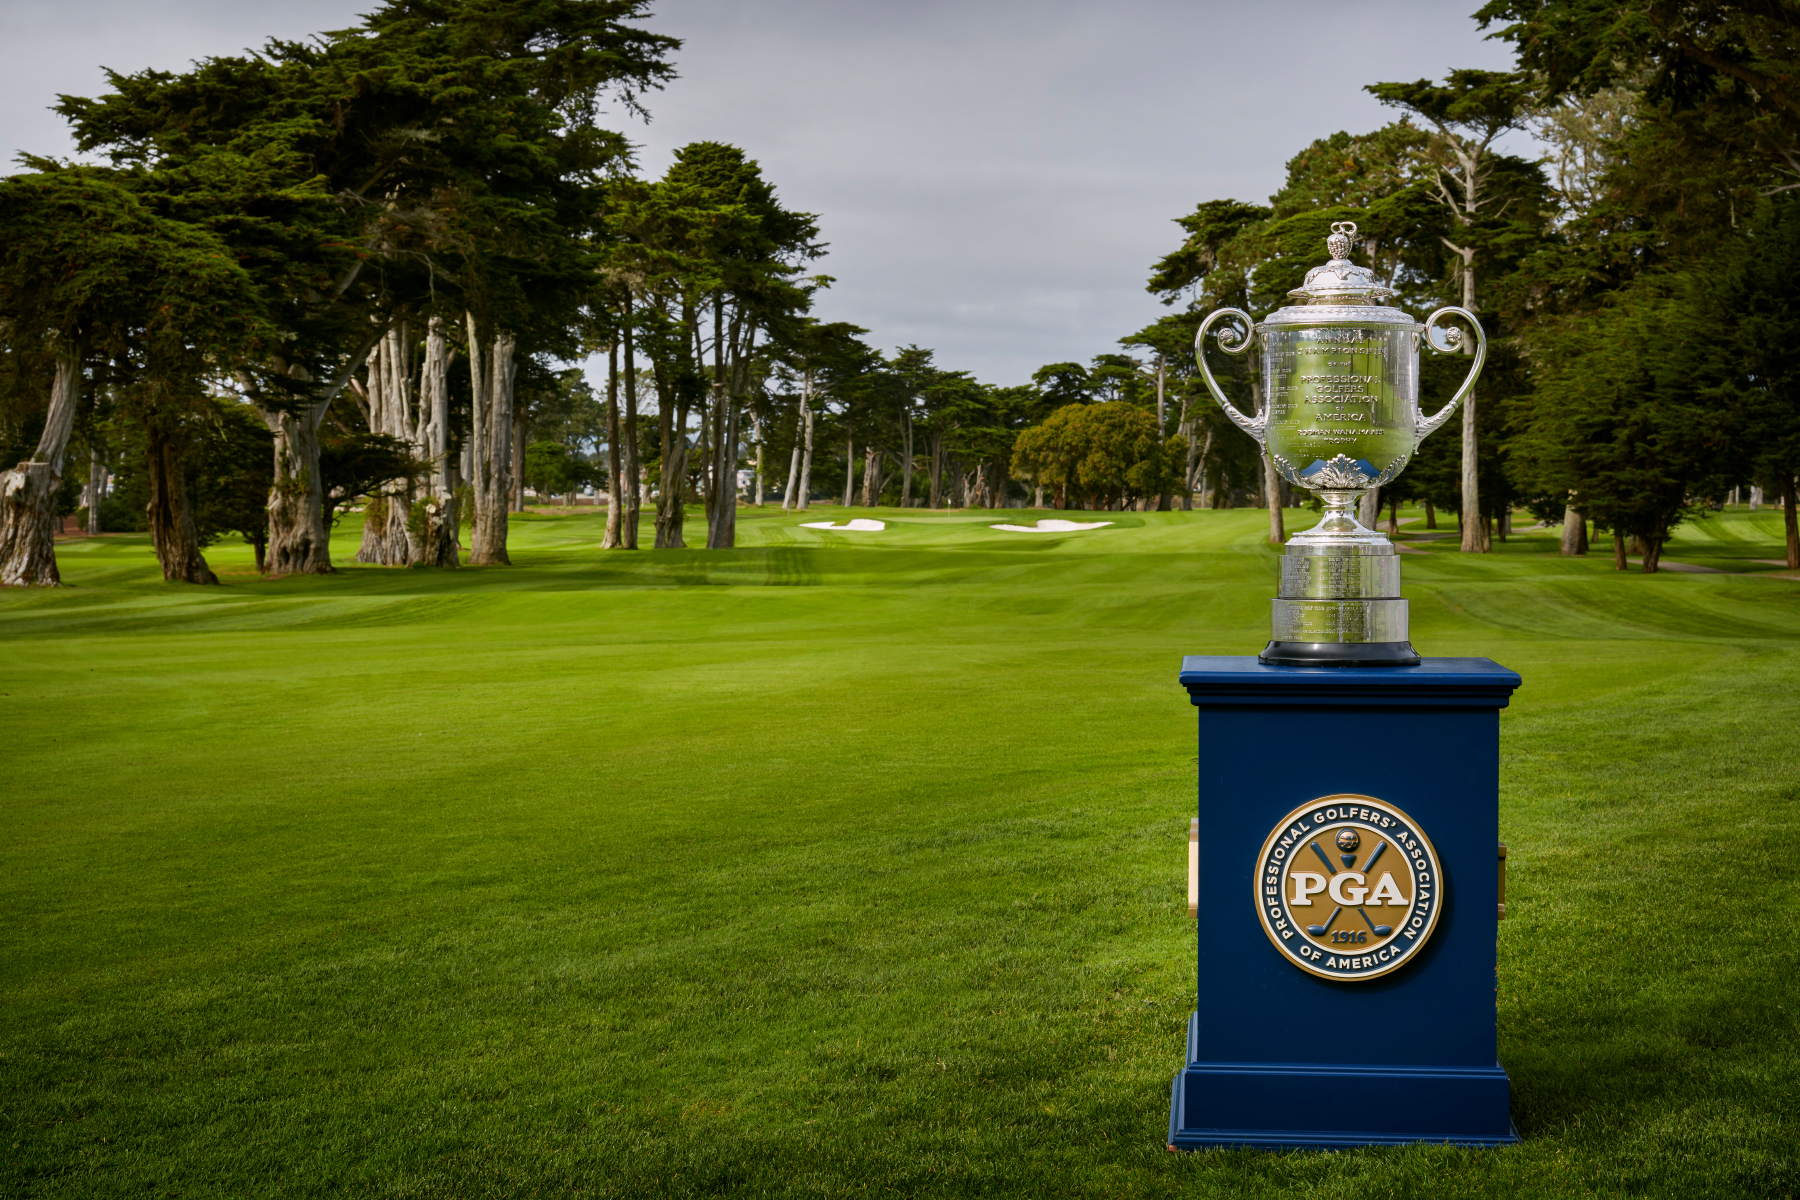 PGA Championship trophy on a beautiful green golf fairway.